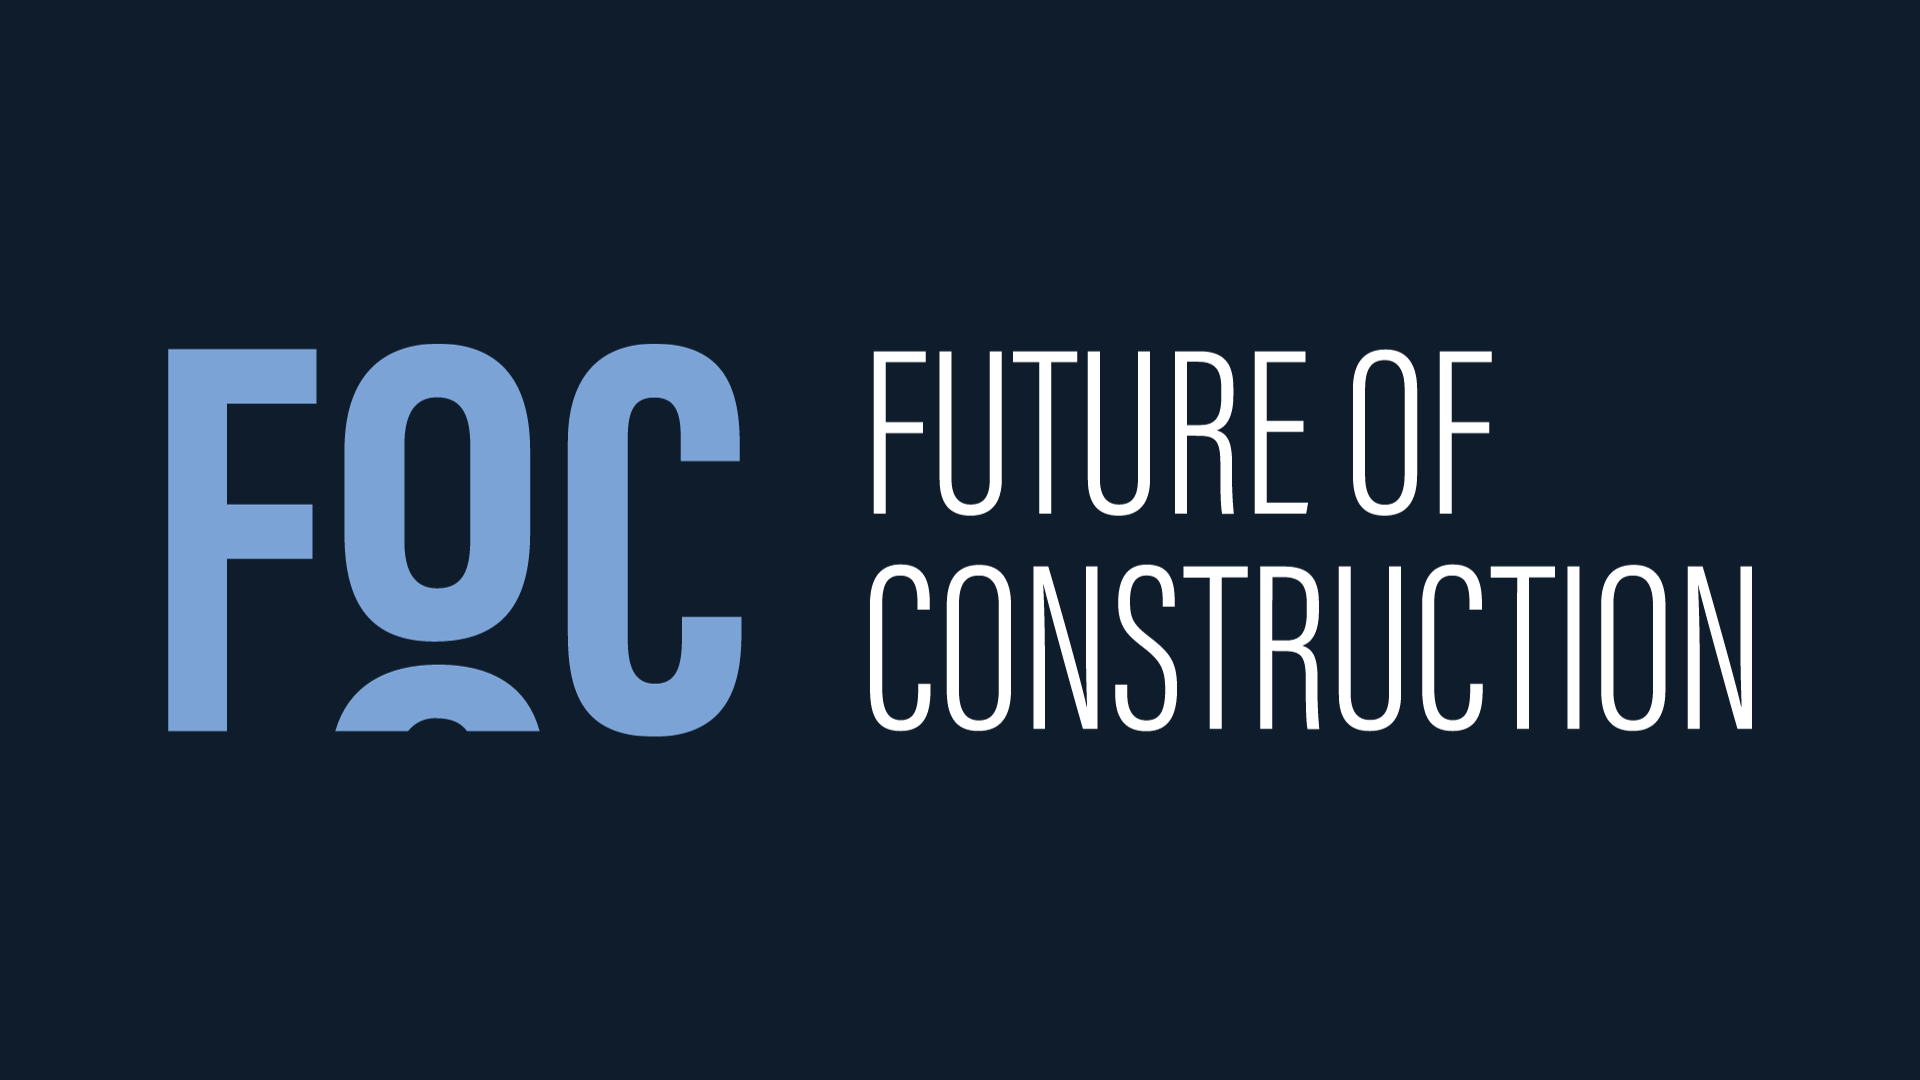 FoC - Future of Construction